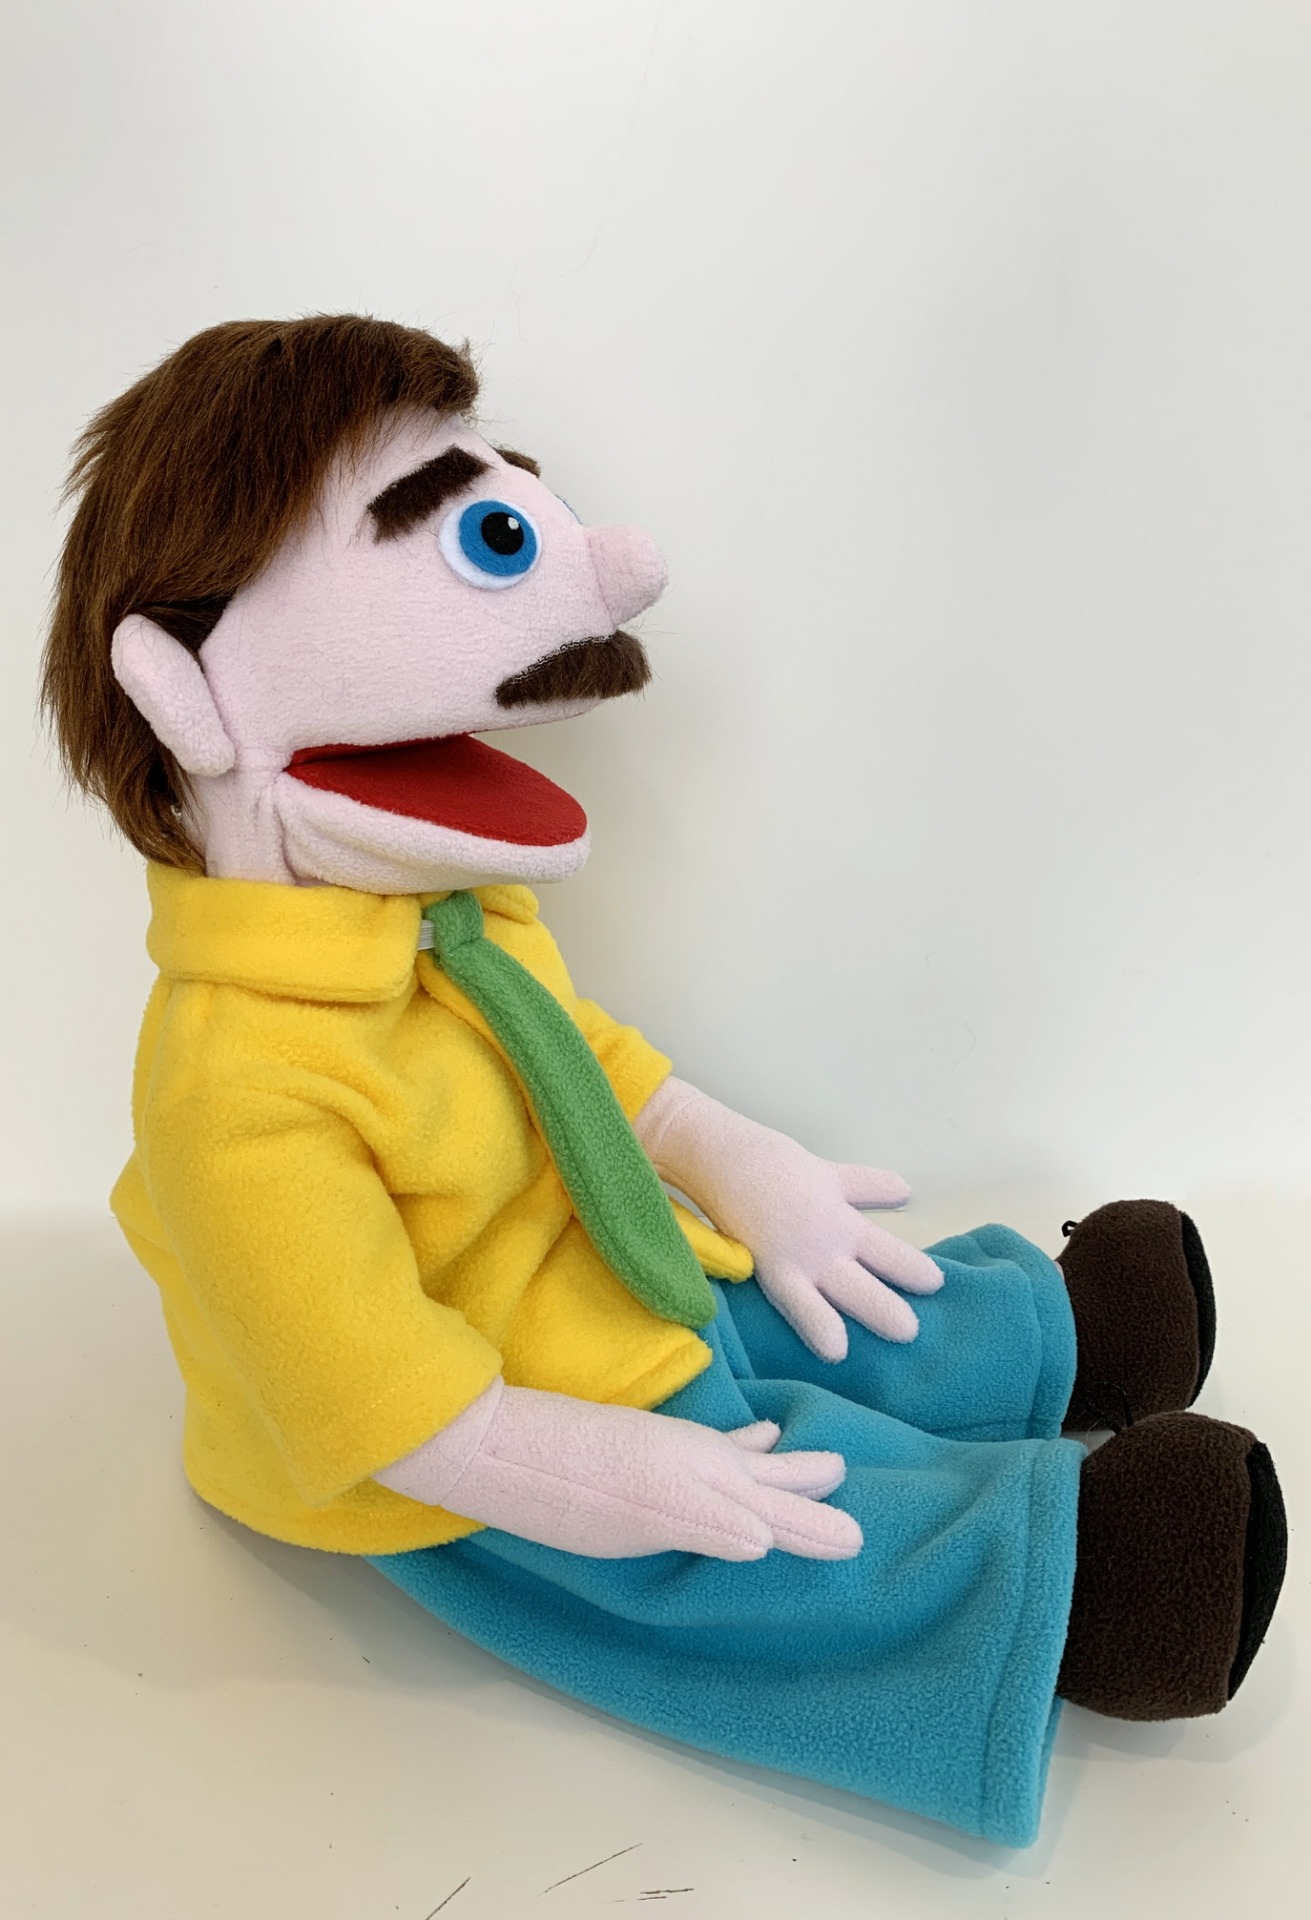 Мужчина Константин с ножками - кукла-маппет с открывающимся ртом, 55 см.